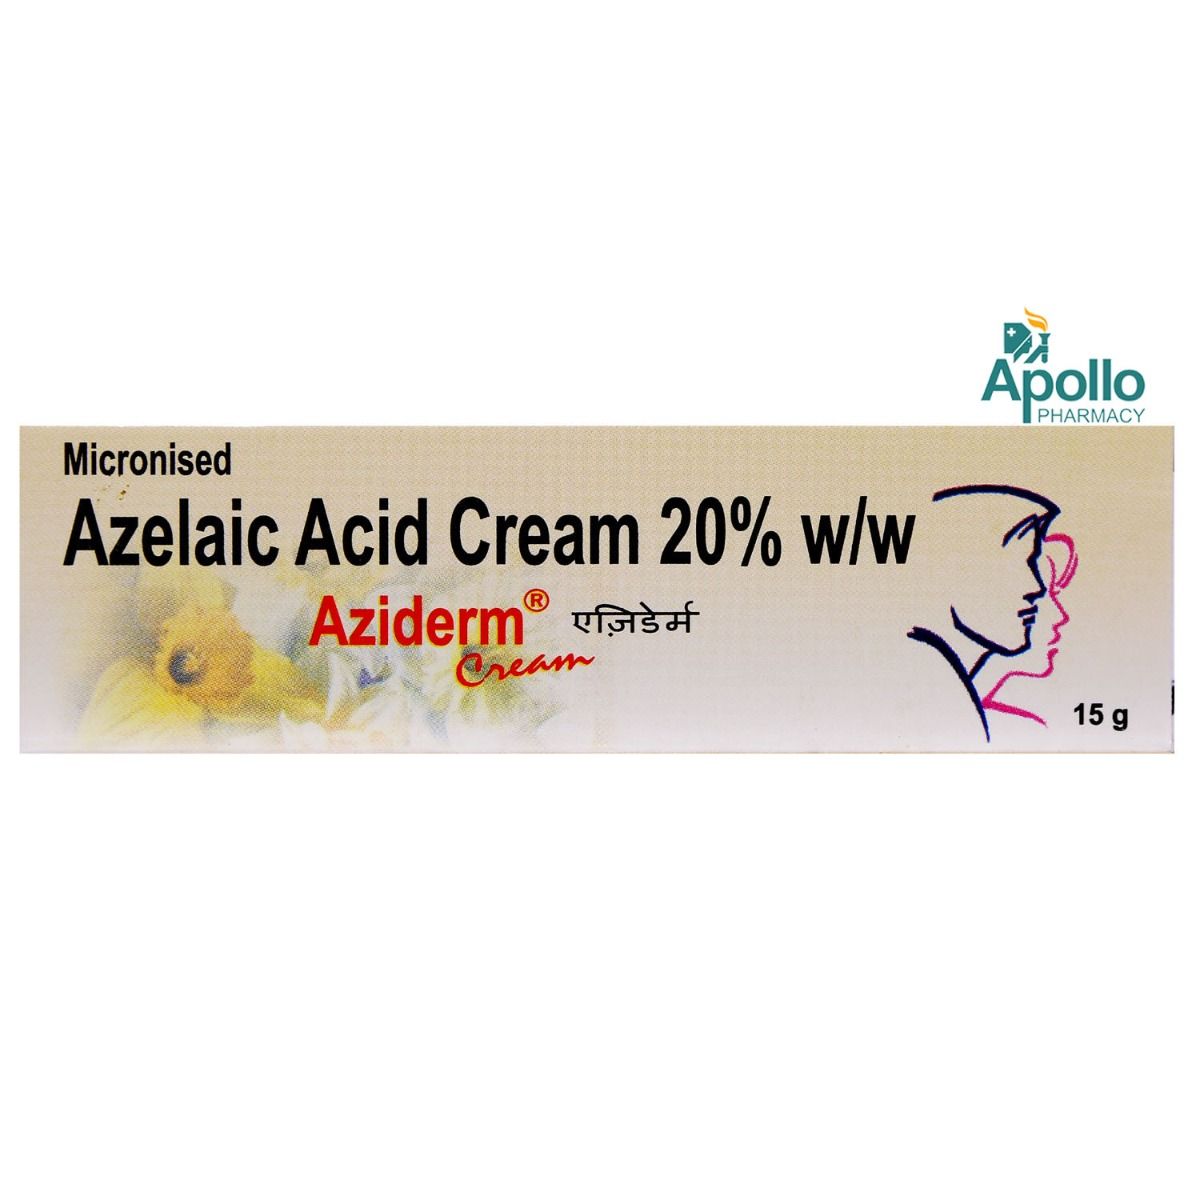 Buy Aziderm 20% Cream 15 gm Online